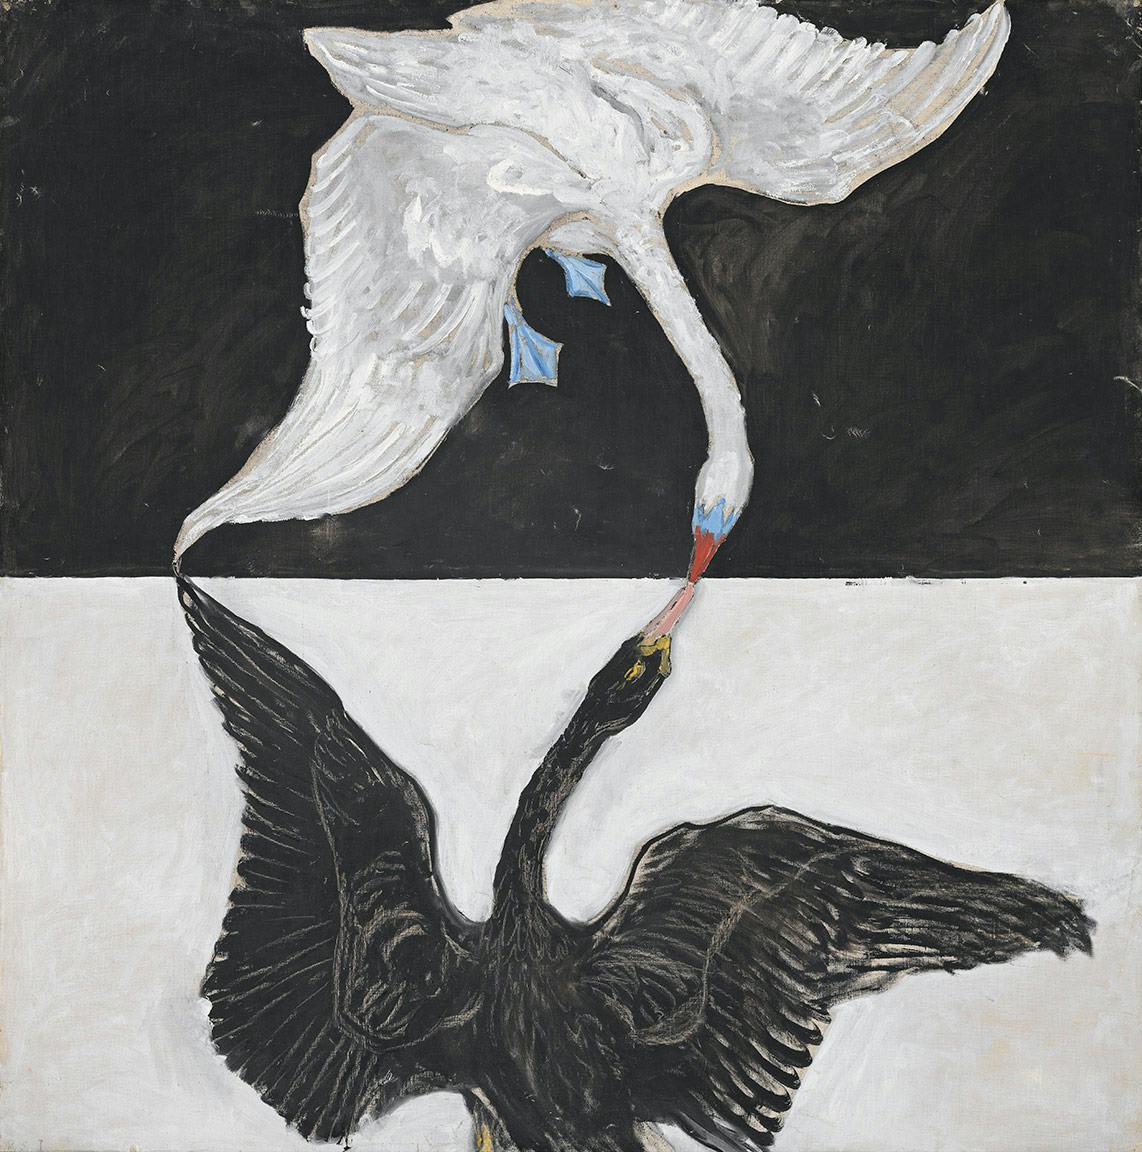 The Swan by Hilma af Klint